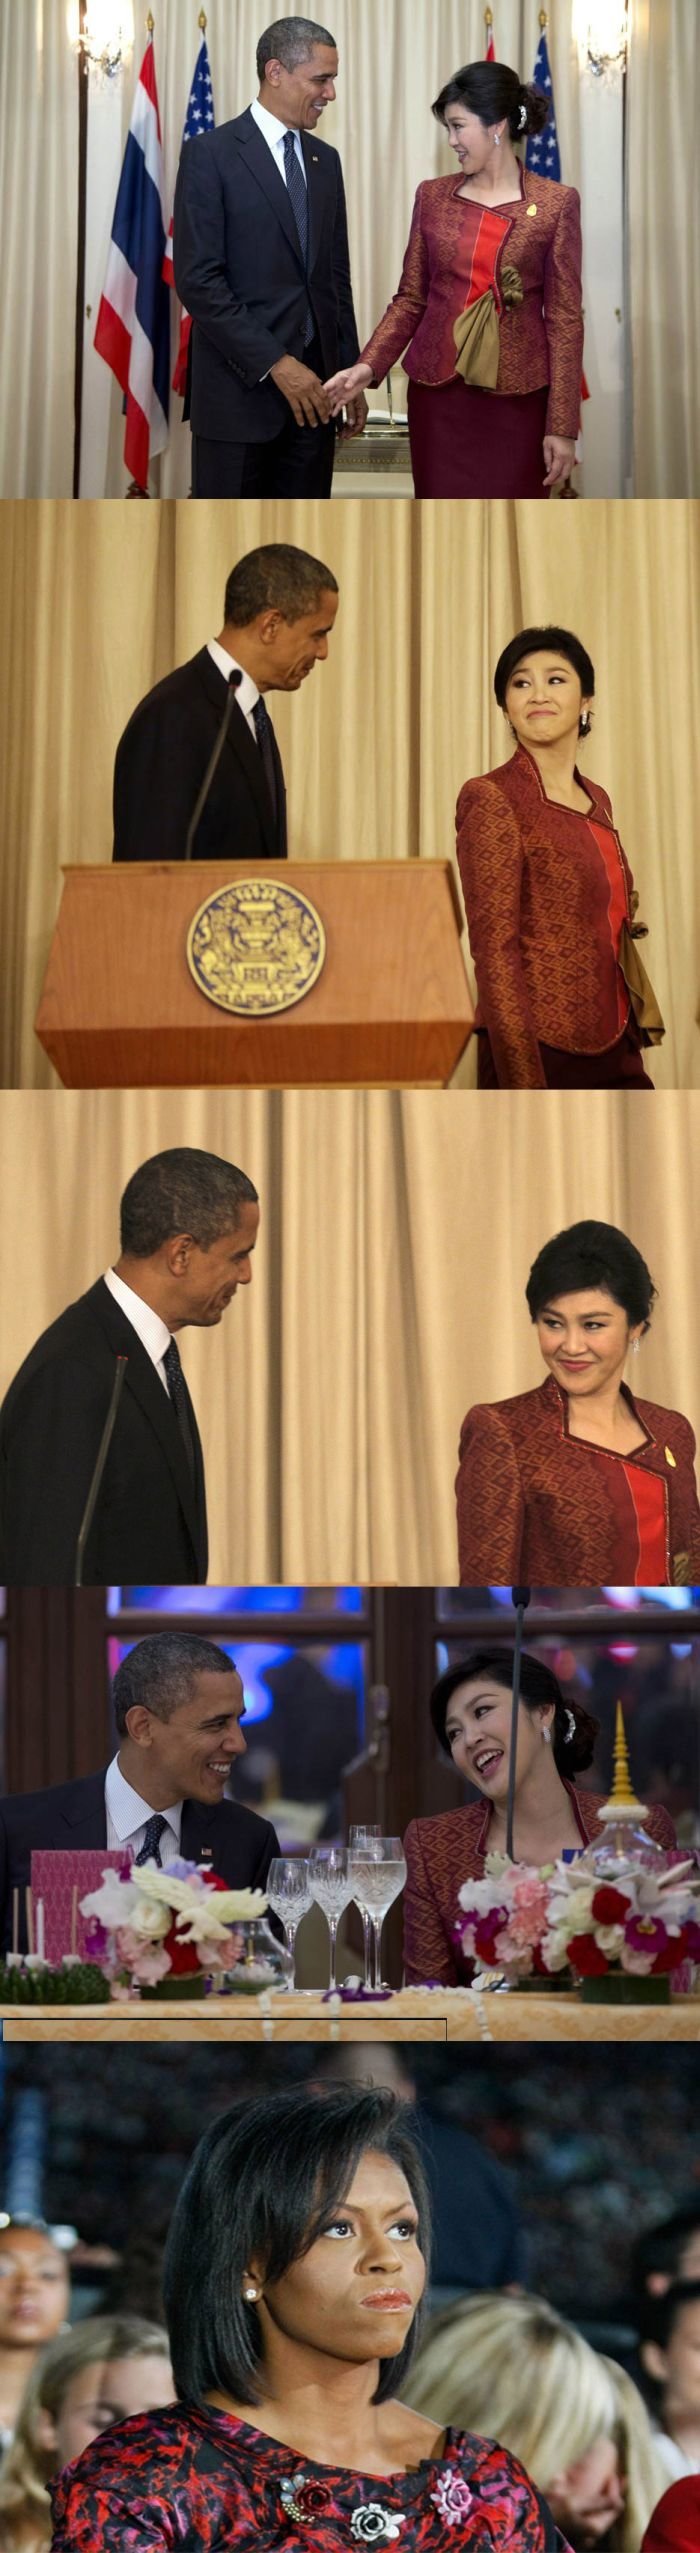 Obama+and+thailand+s+prime+minister_96c6f5_5809009.jpg